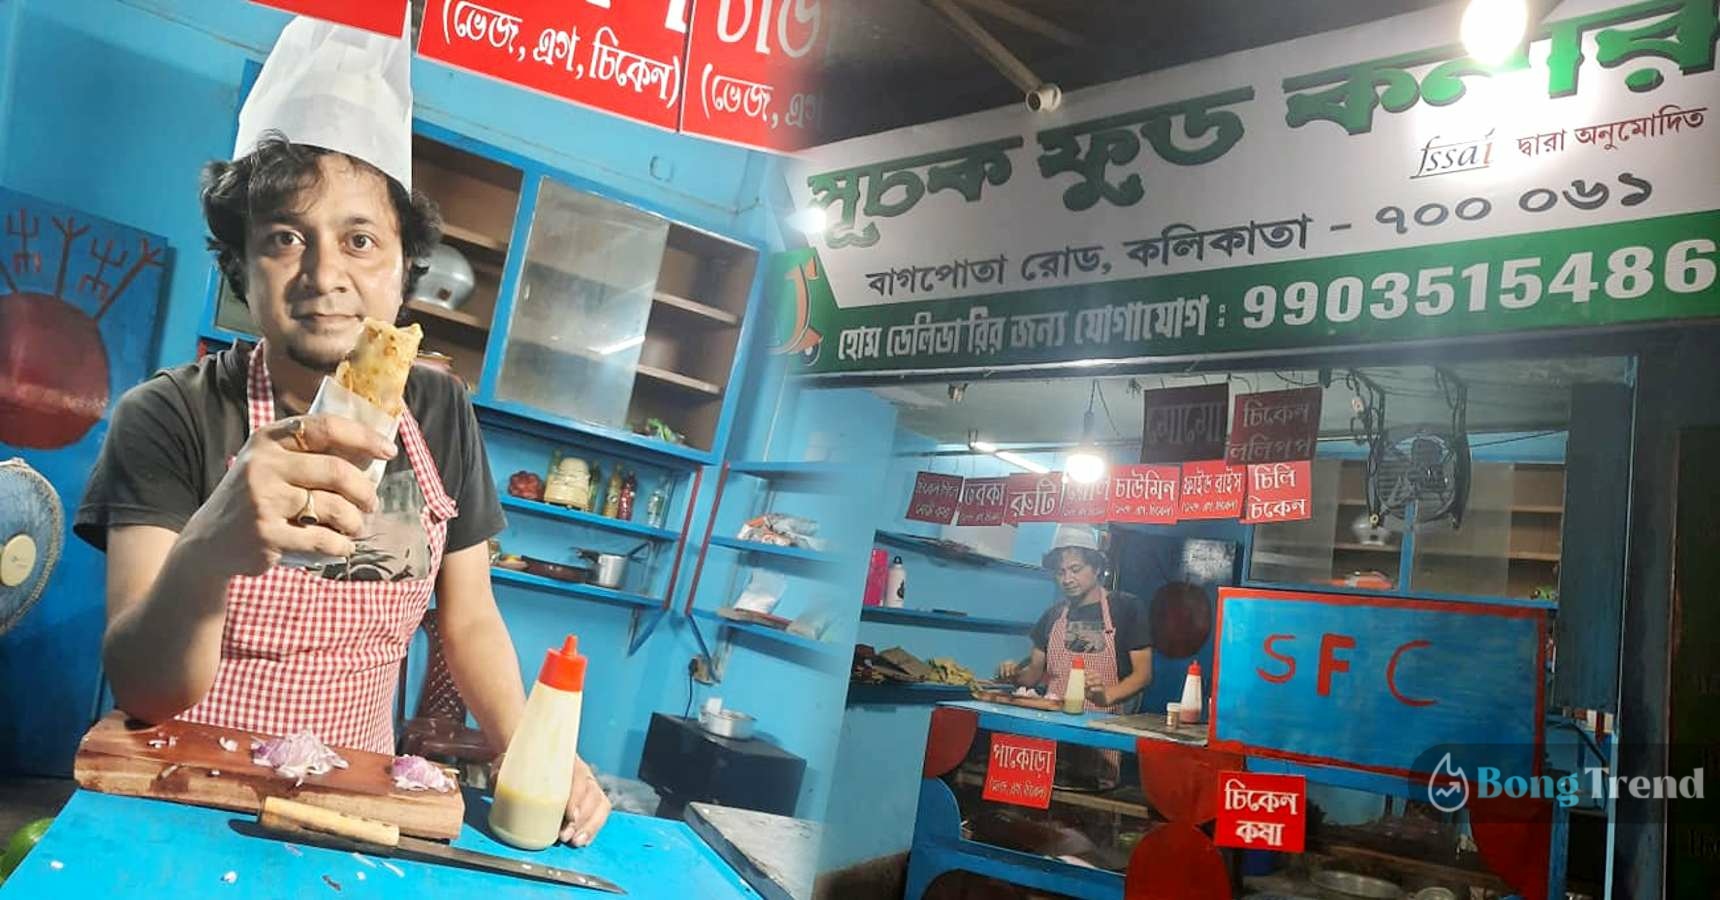 Director Premangshu Roy stops Filmy Carrier opens fast food centre